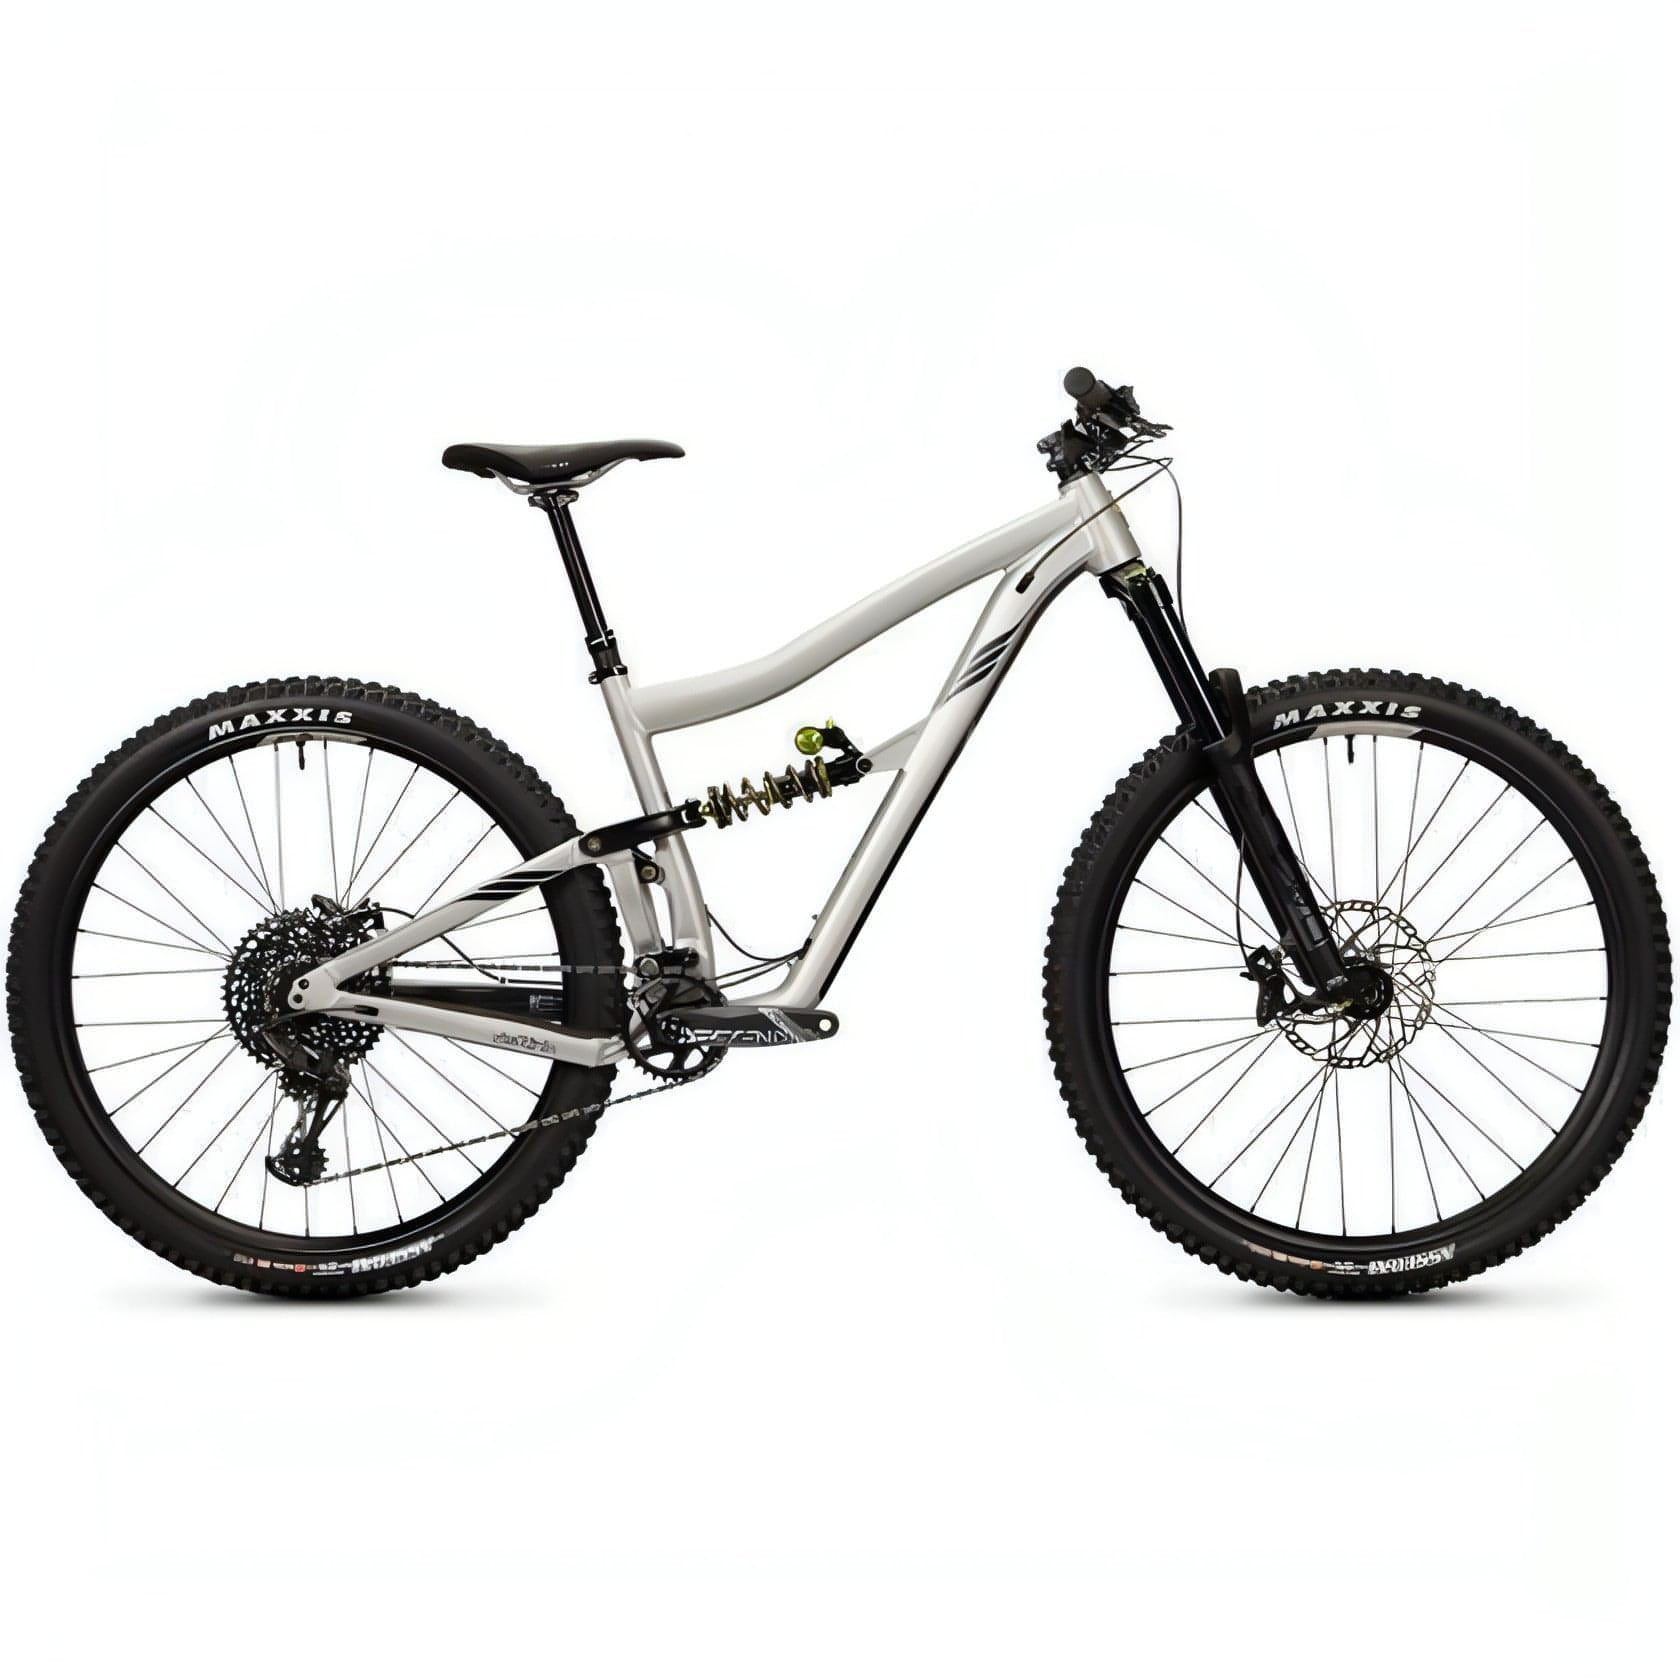 Ibis Ripmo AF Coil NGX Mountain Bike 2021 - Silver 5054977117426 - Start Fitness